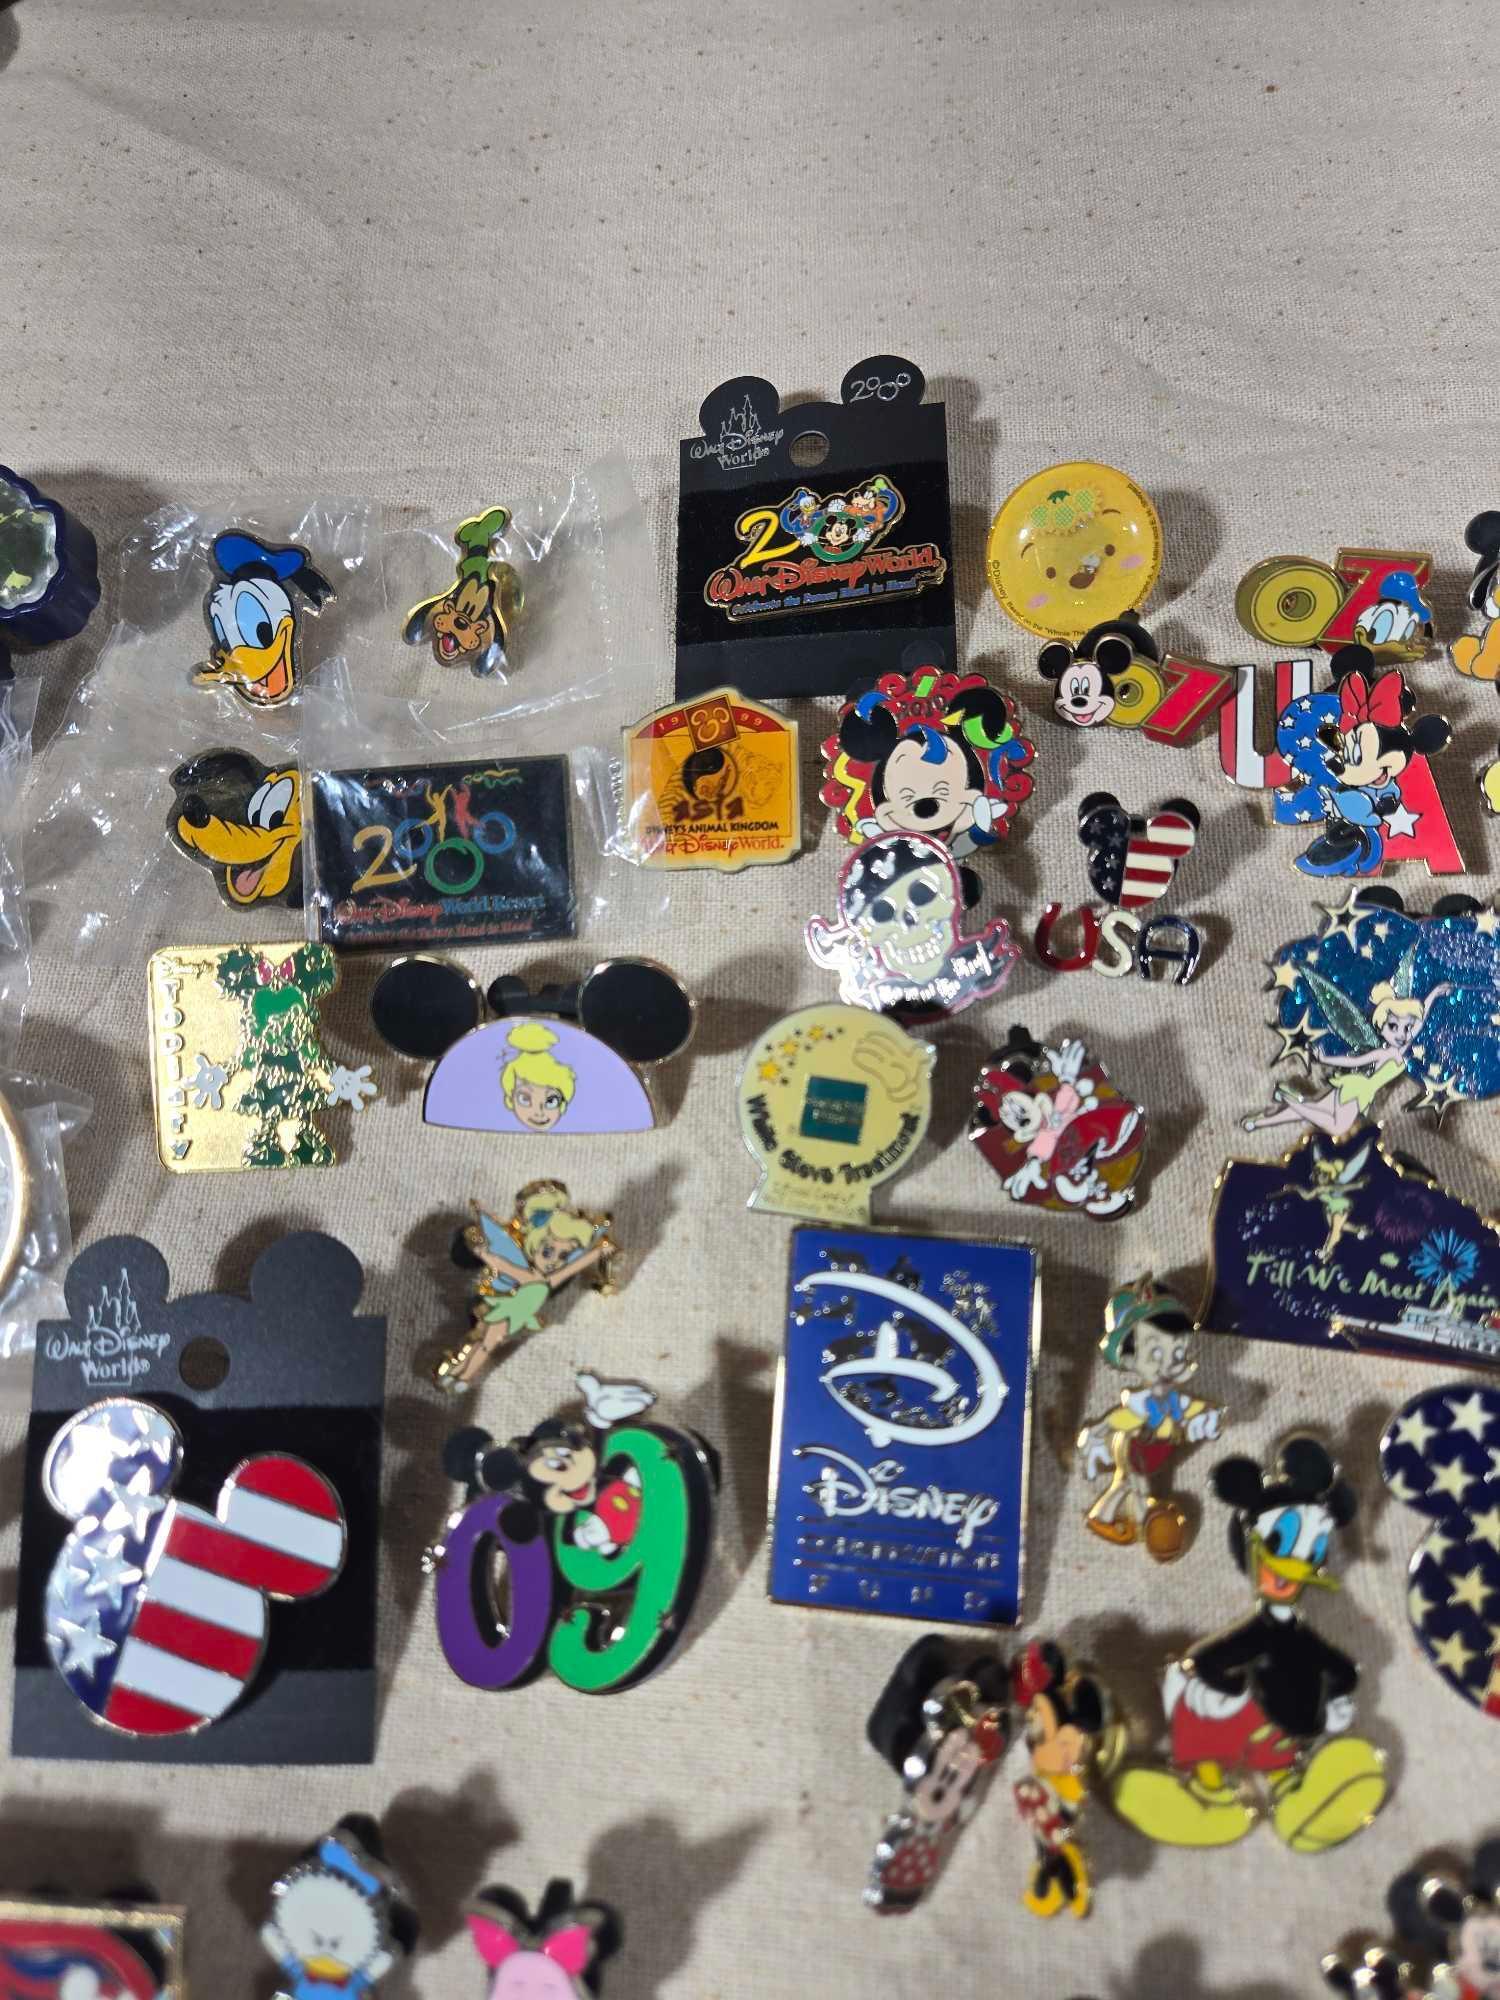 70+ Disney Pins